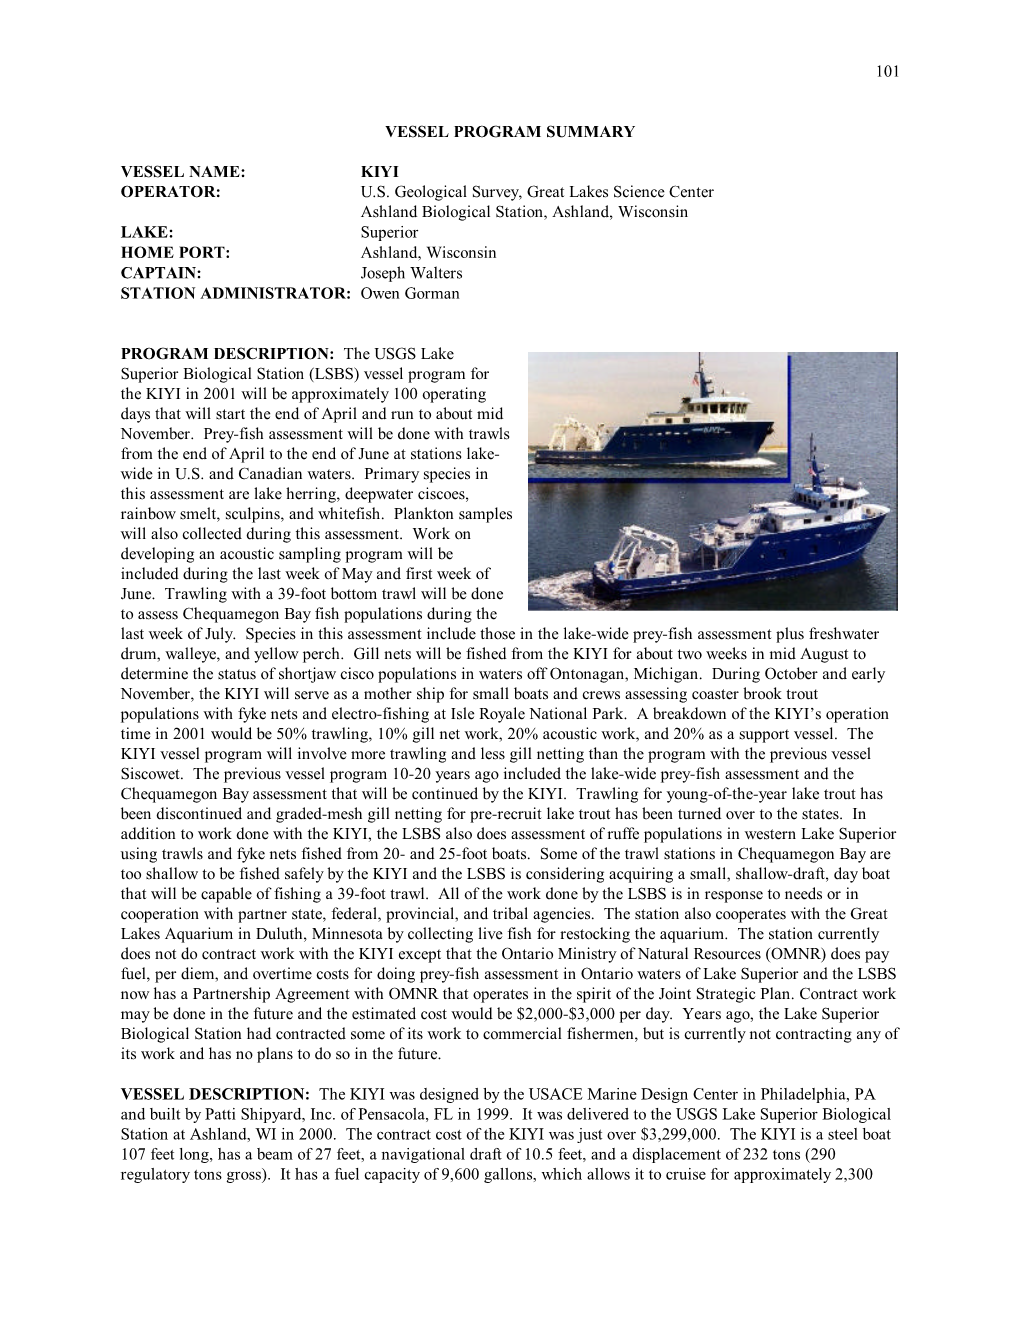 101 Vessel Program Summary Vessel Name: Kiyi Operator